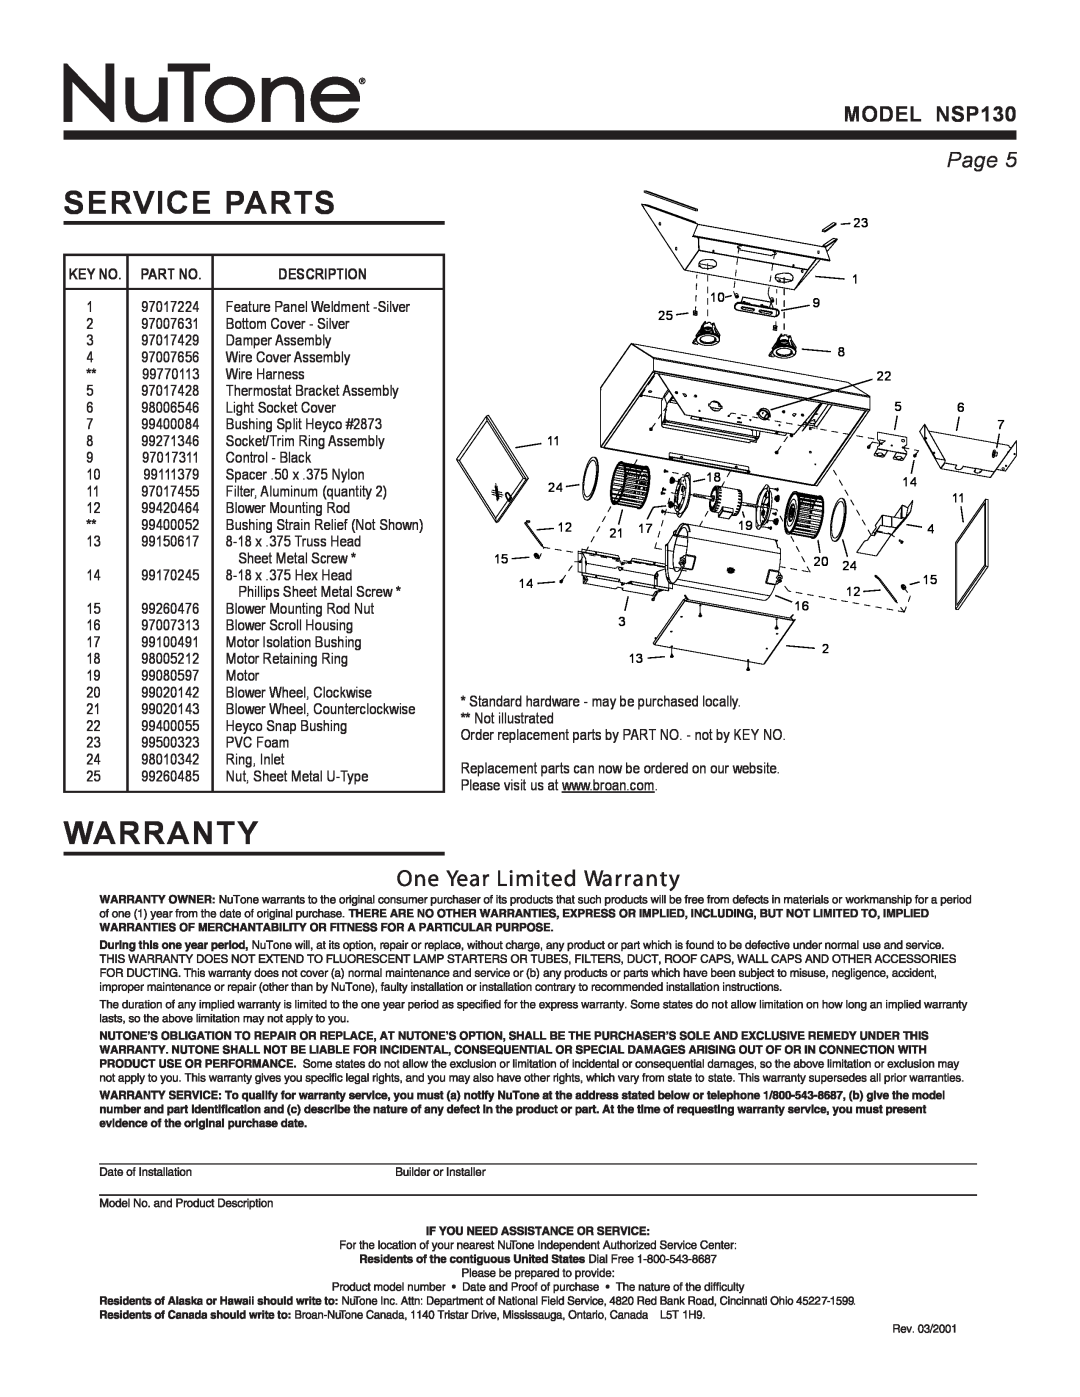 NuTone NSP130 service parts, warranty, model nsp130, Page , Description 